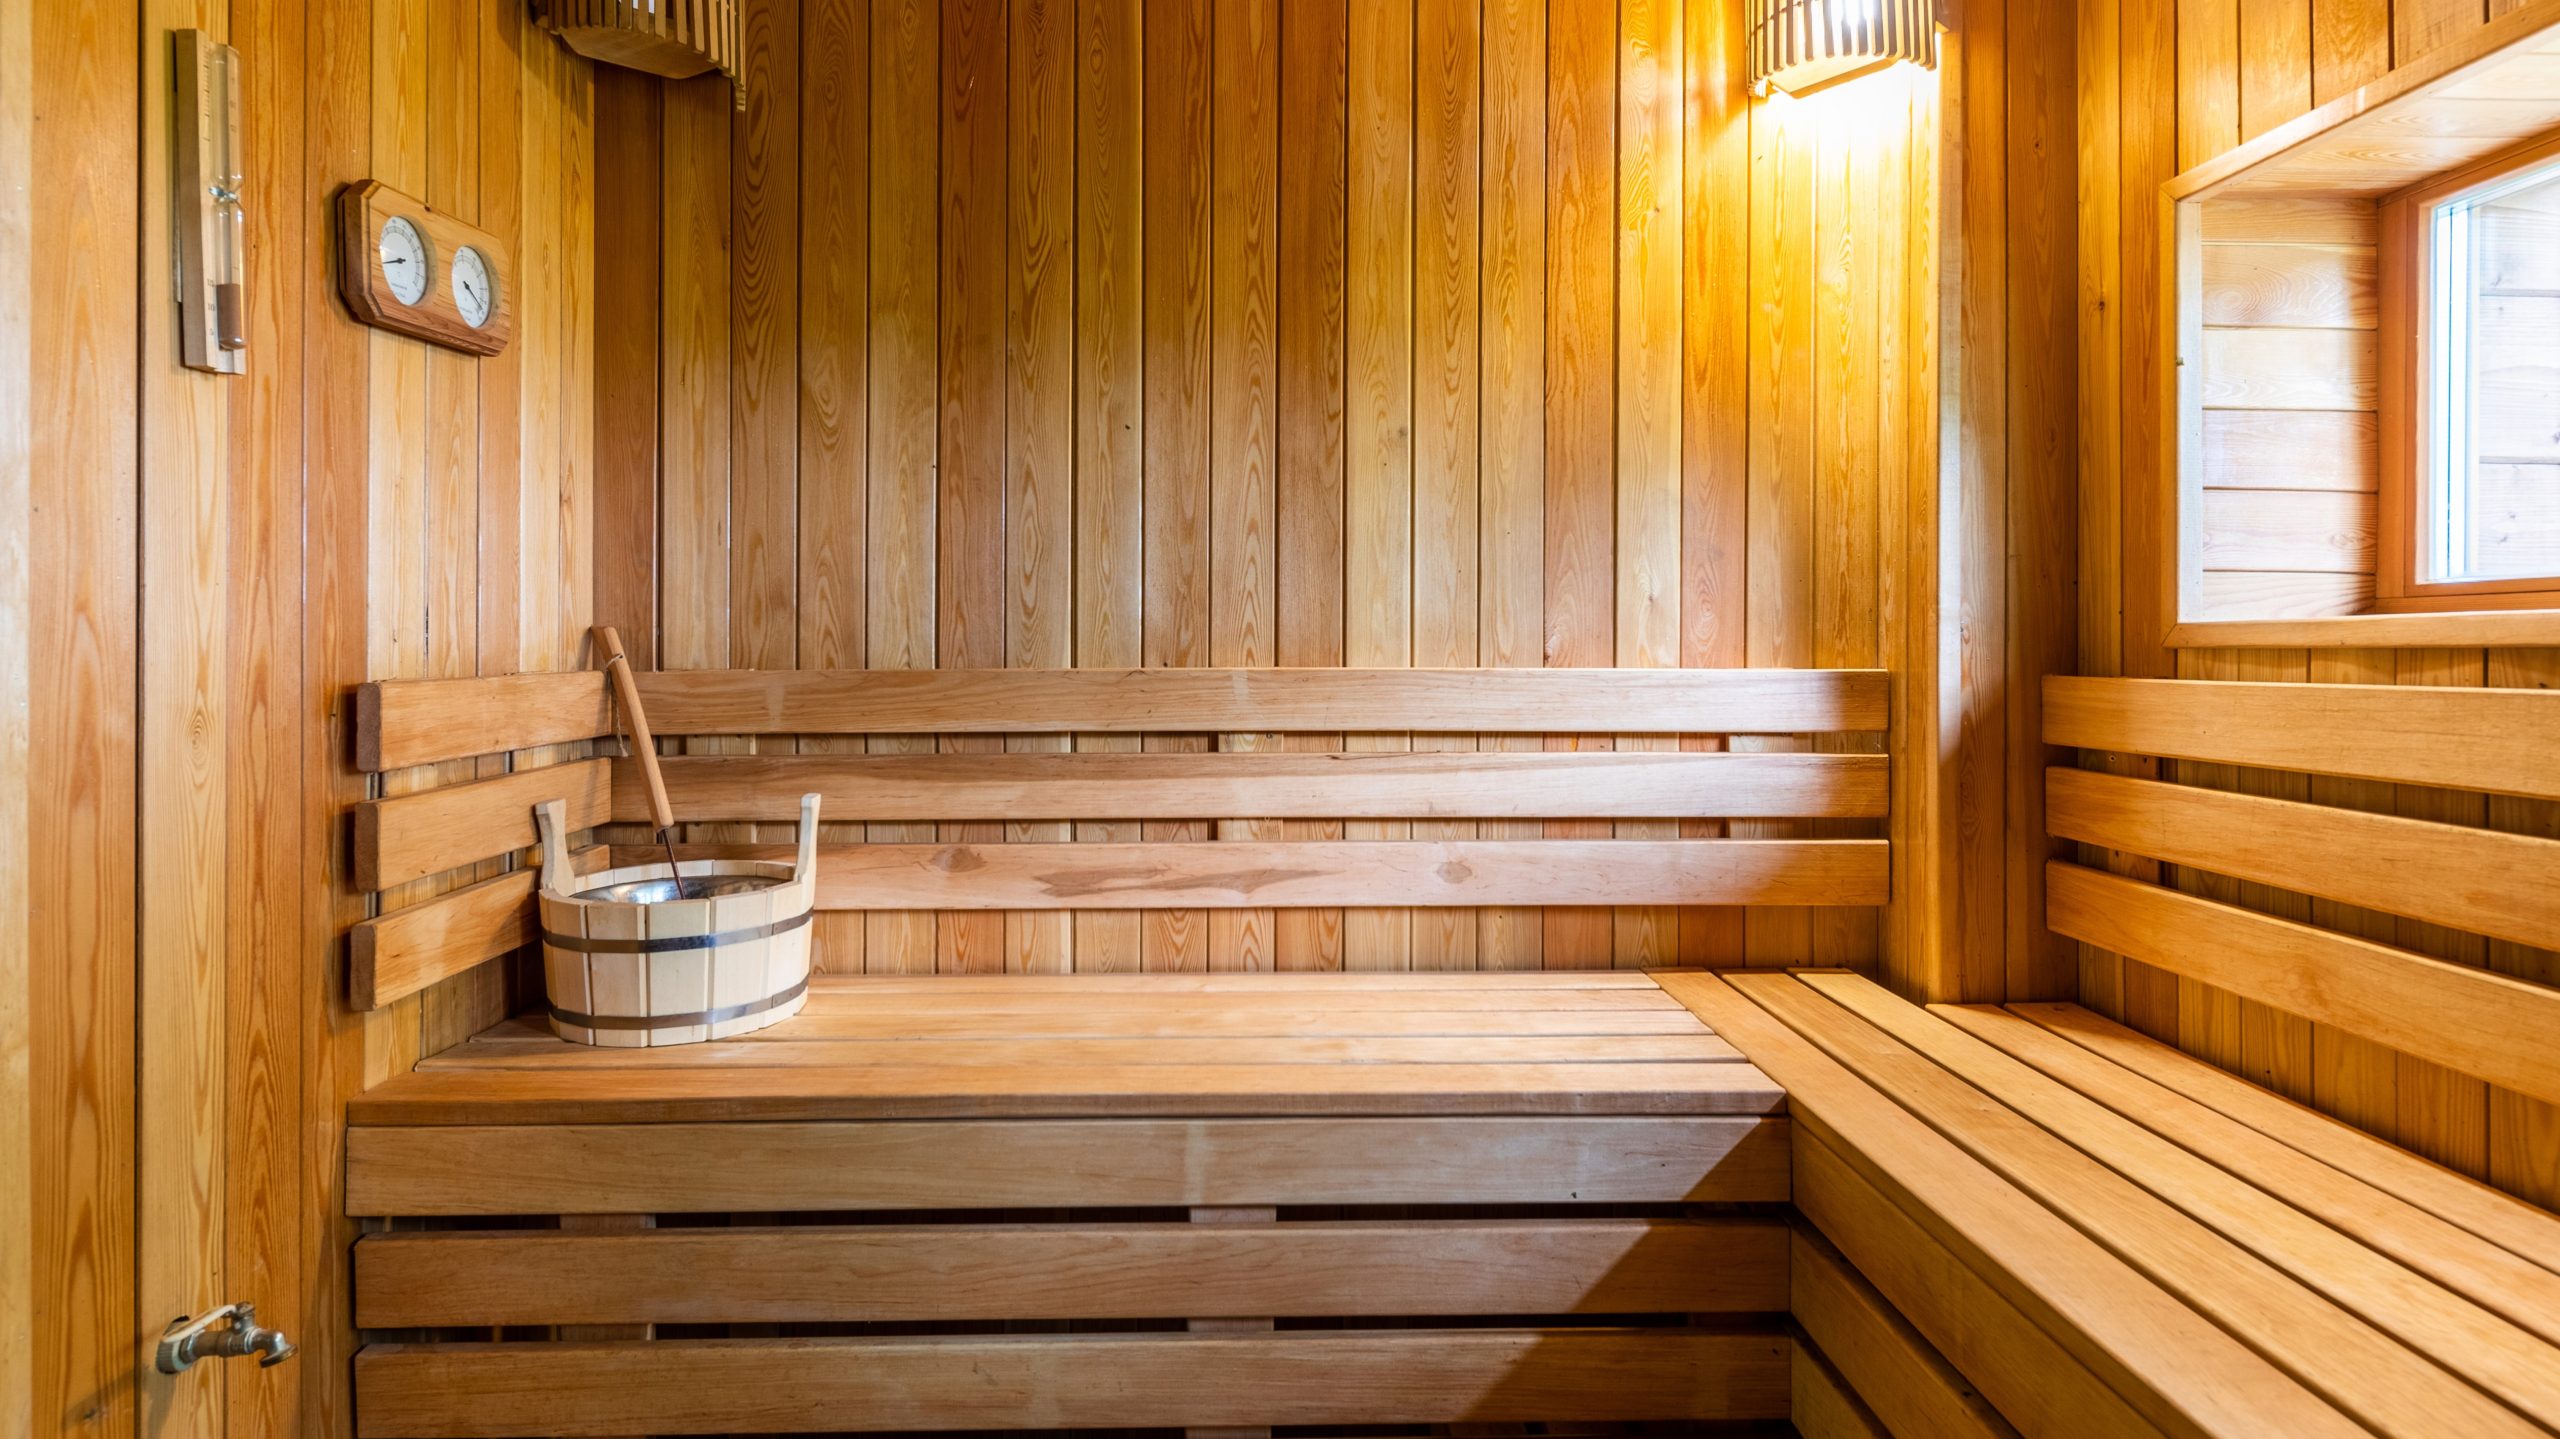 regular sauna use provides health benefits